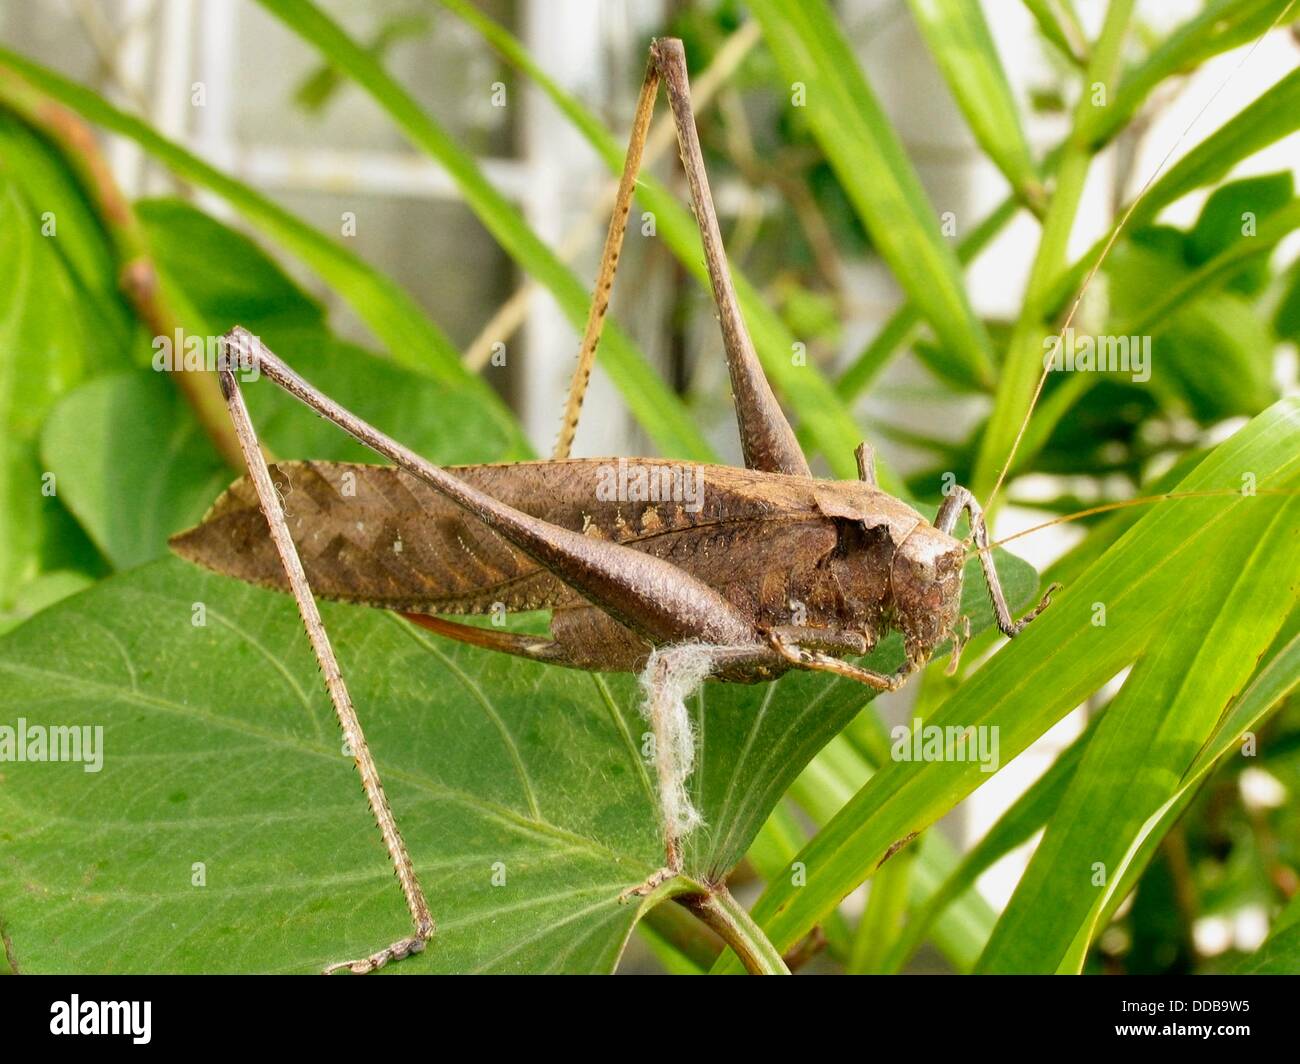 Brown Long-horned Grasshopper on a leaf, Sinhangad, Pune, Maharashtra, India Stock Photo